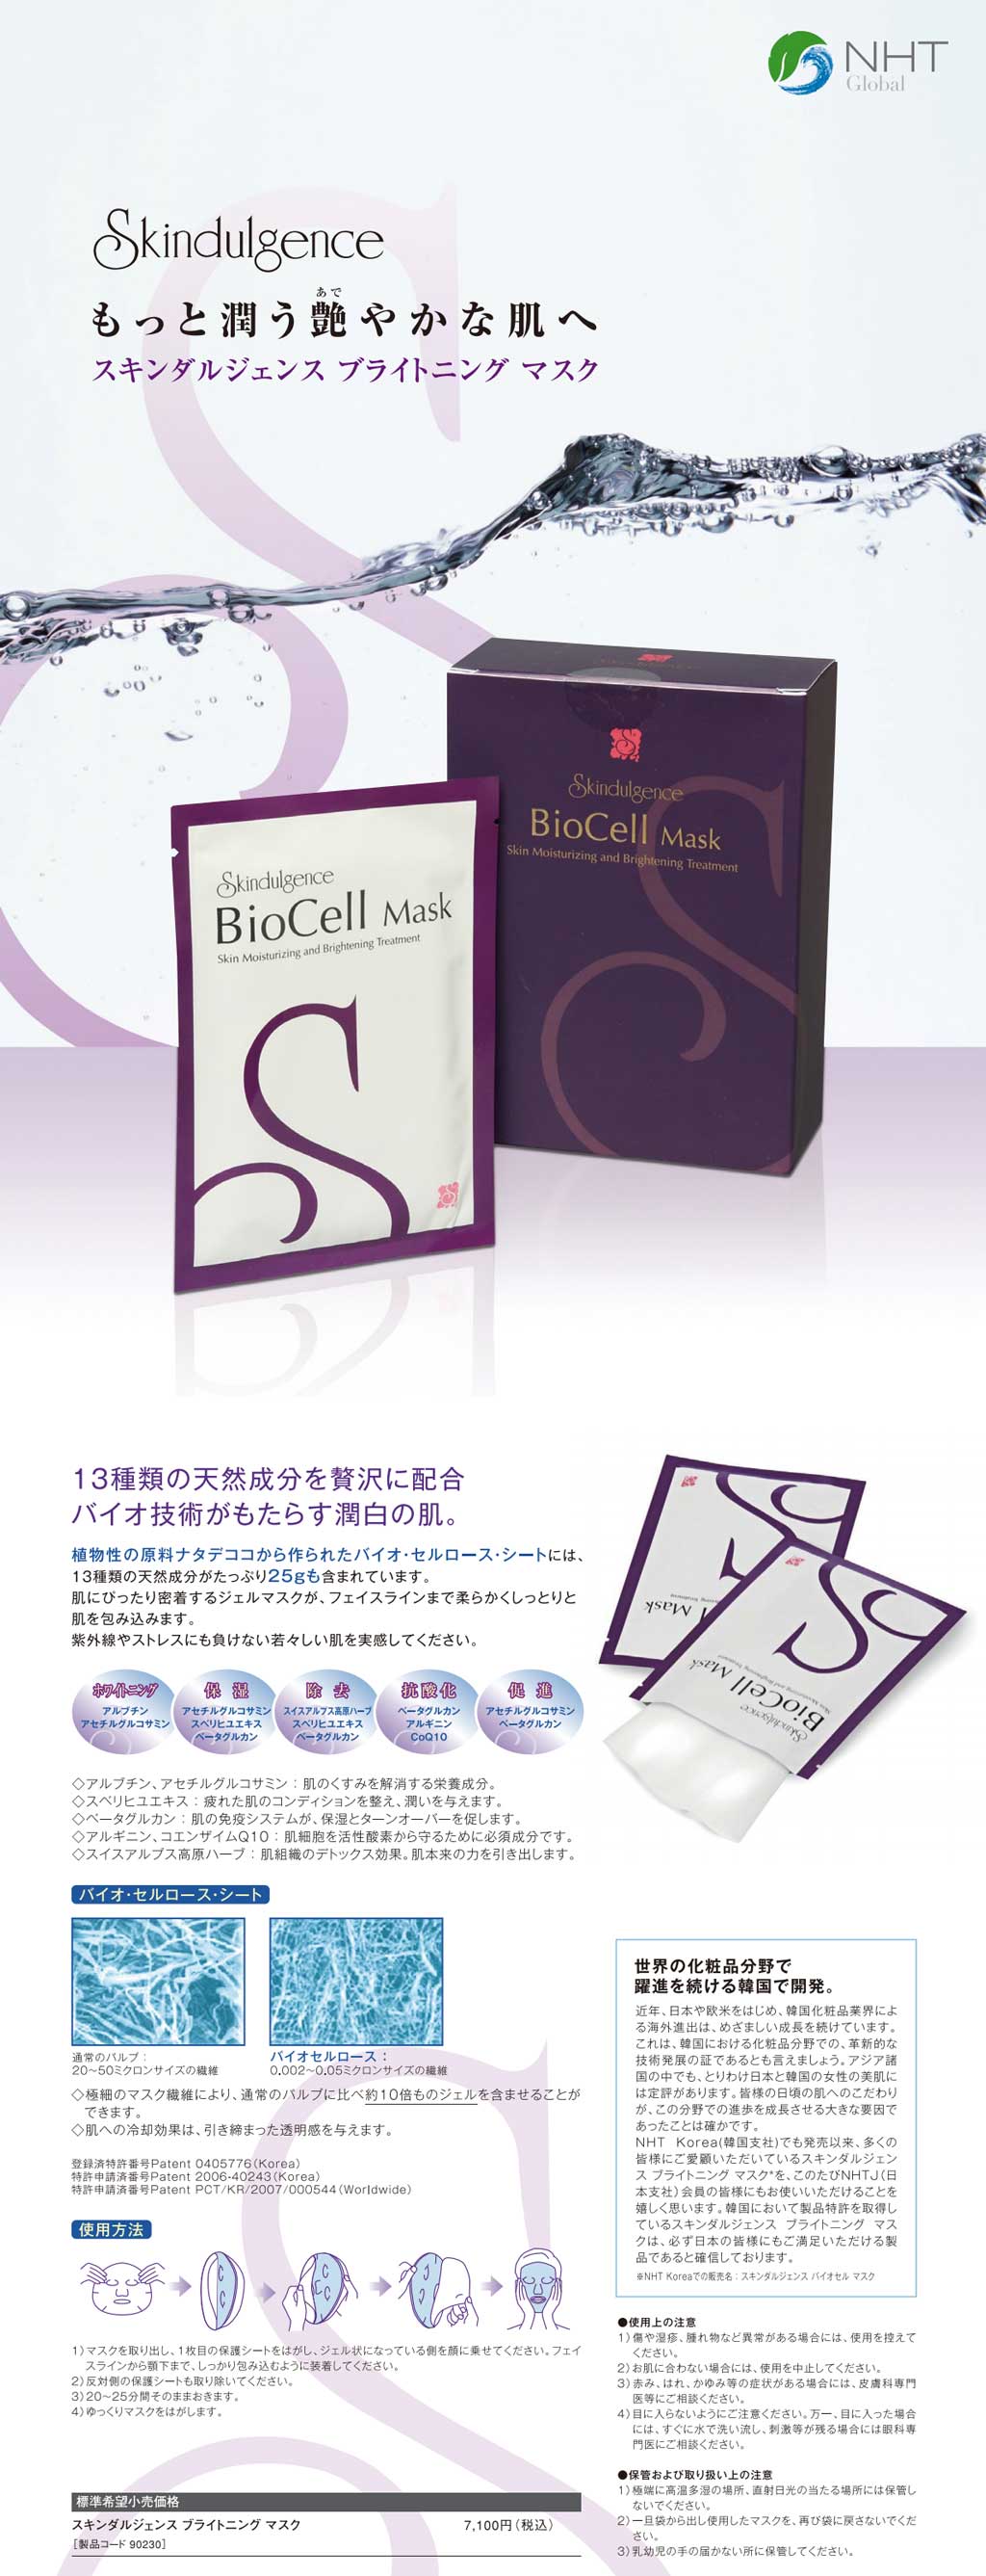 biocell mask japanese info nht global